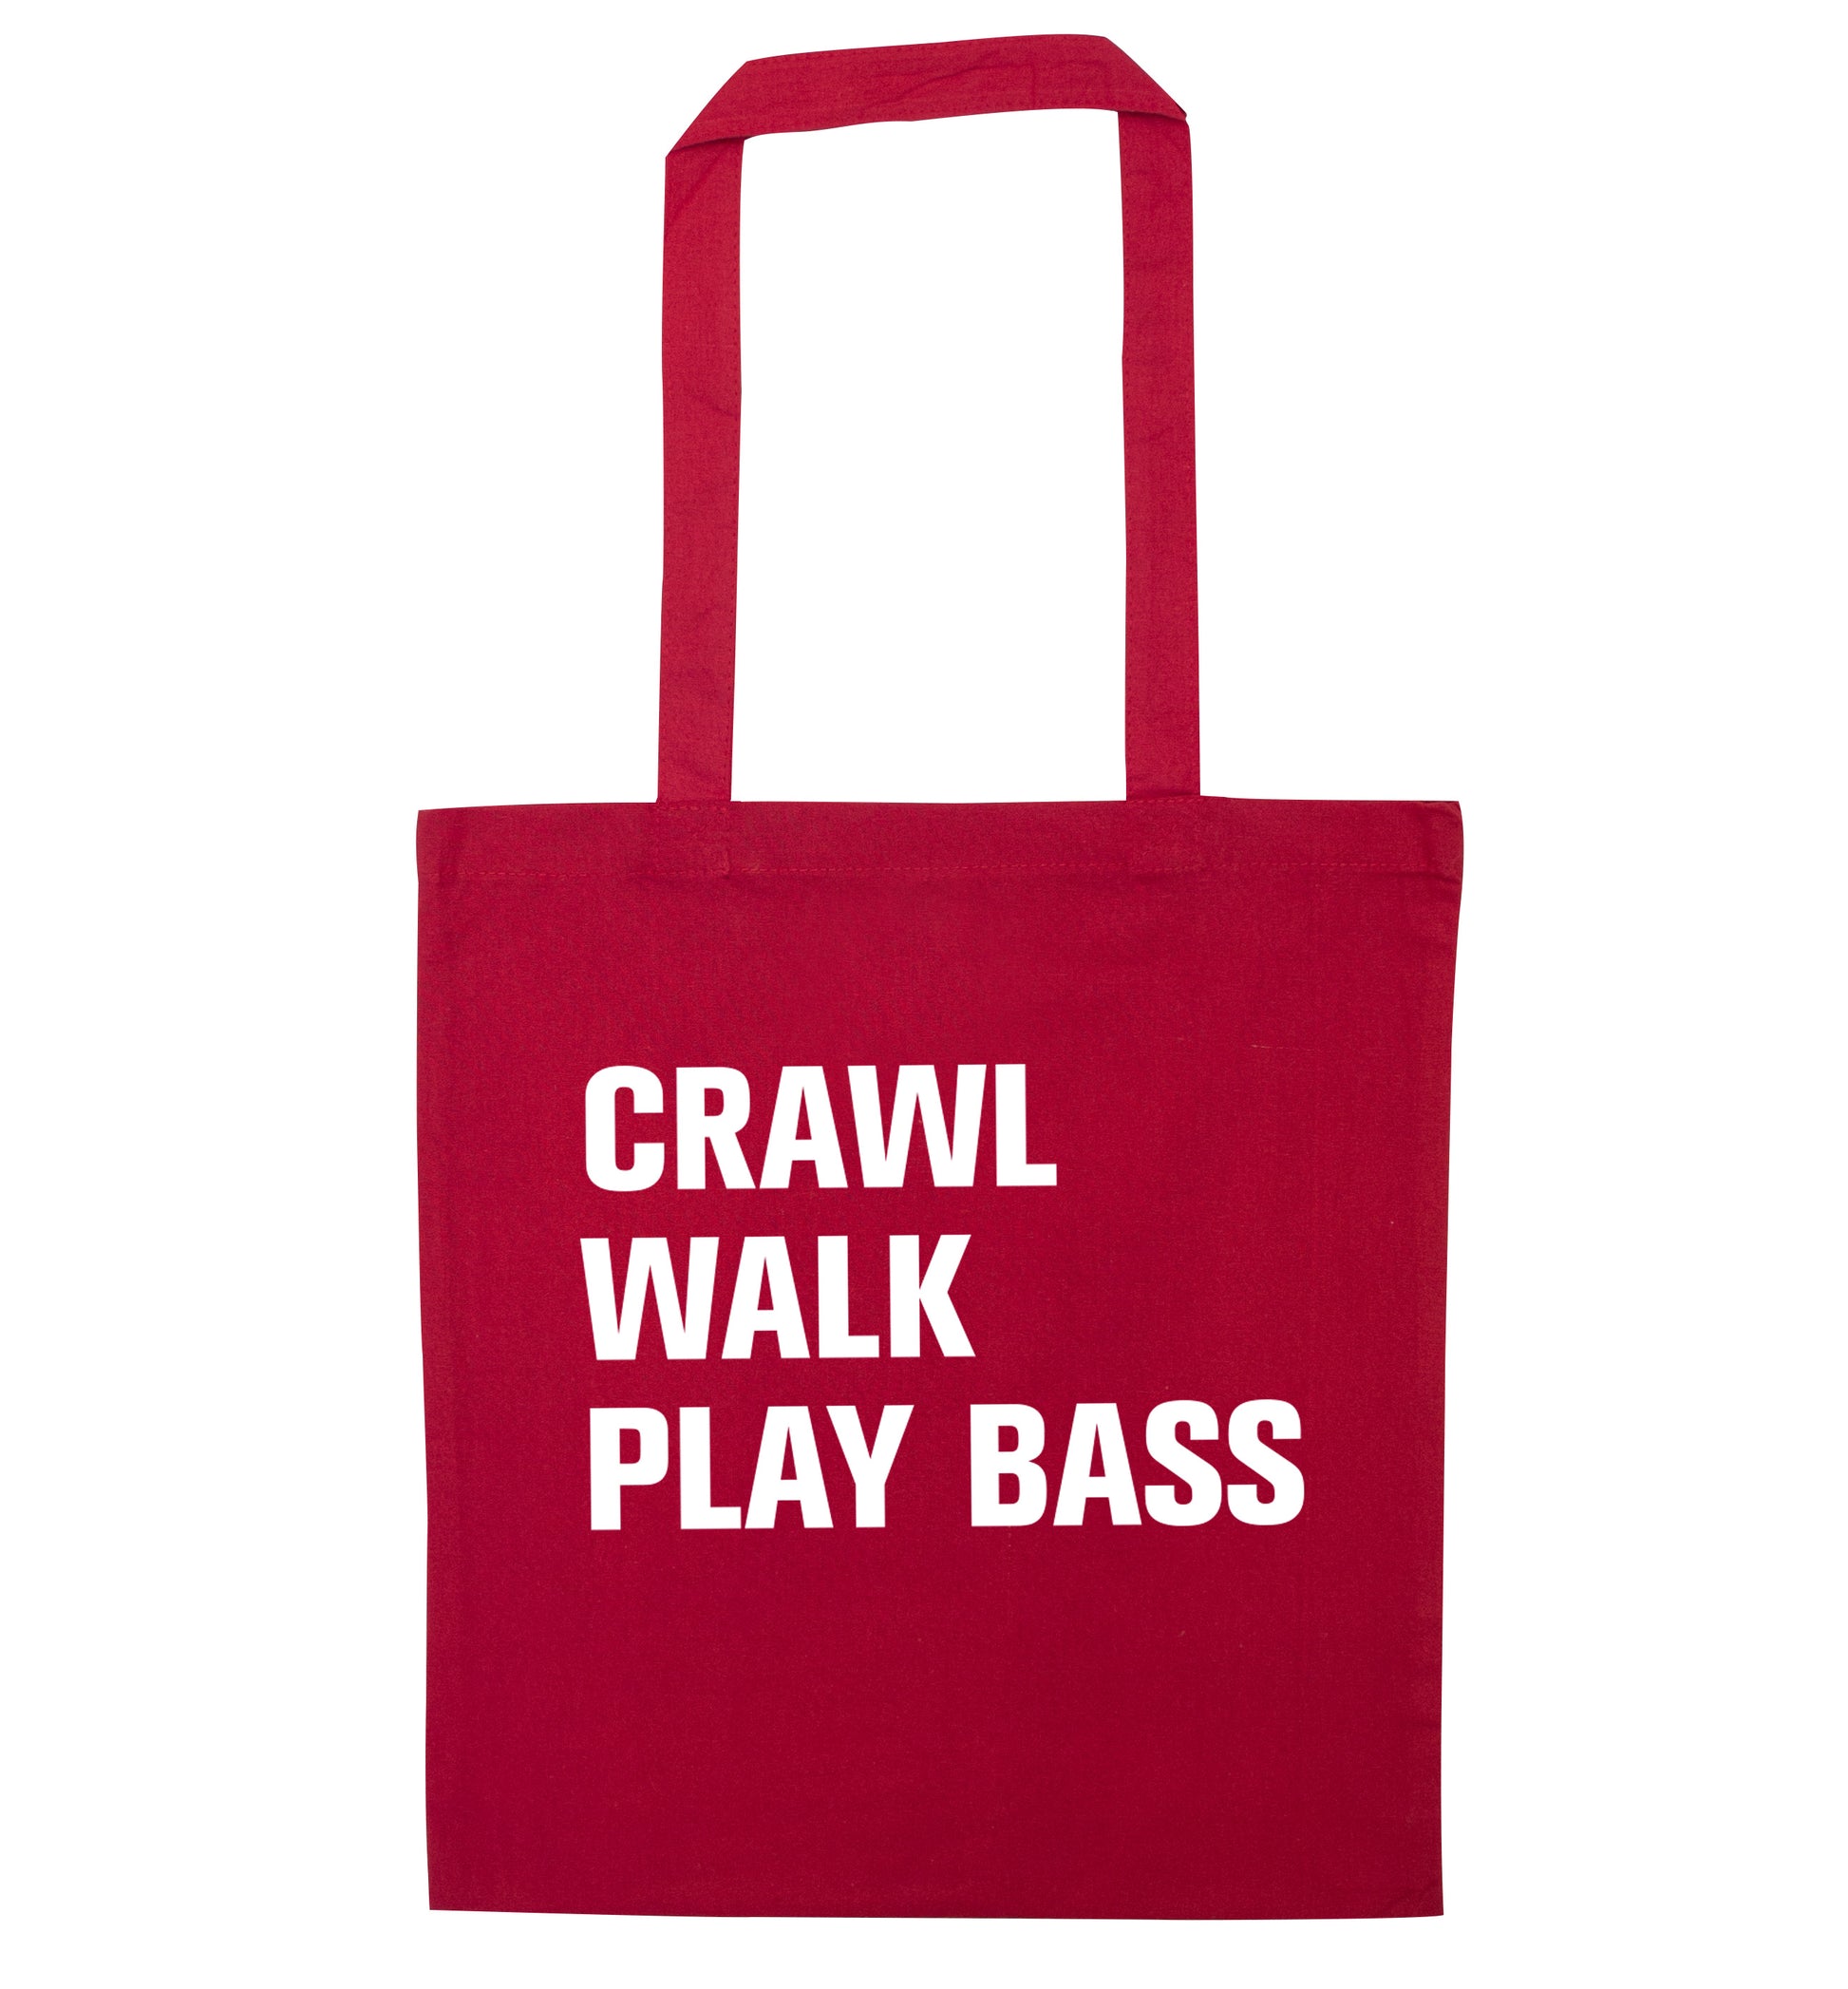 Crawl Walk Play Bass red tote bag